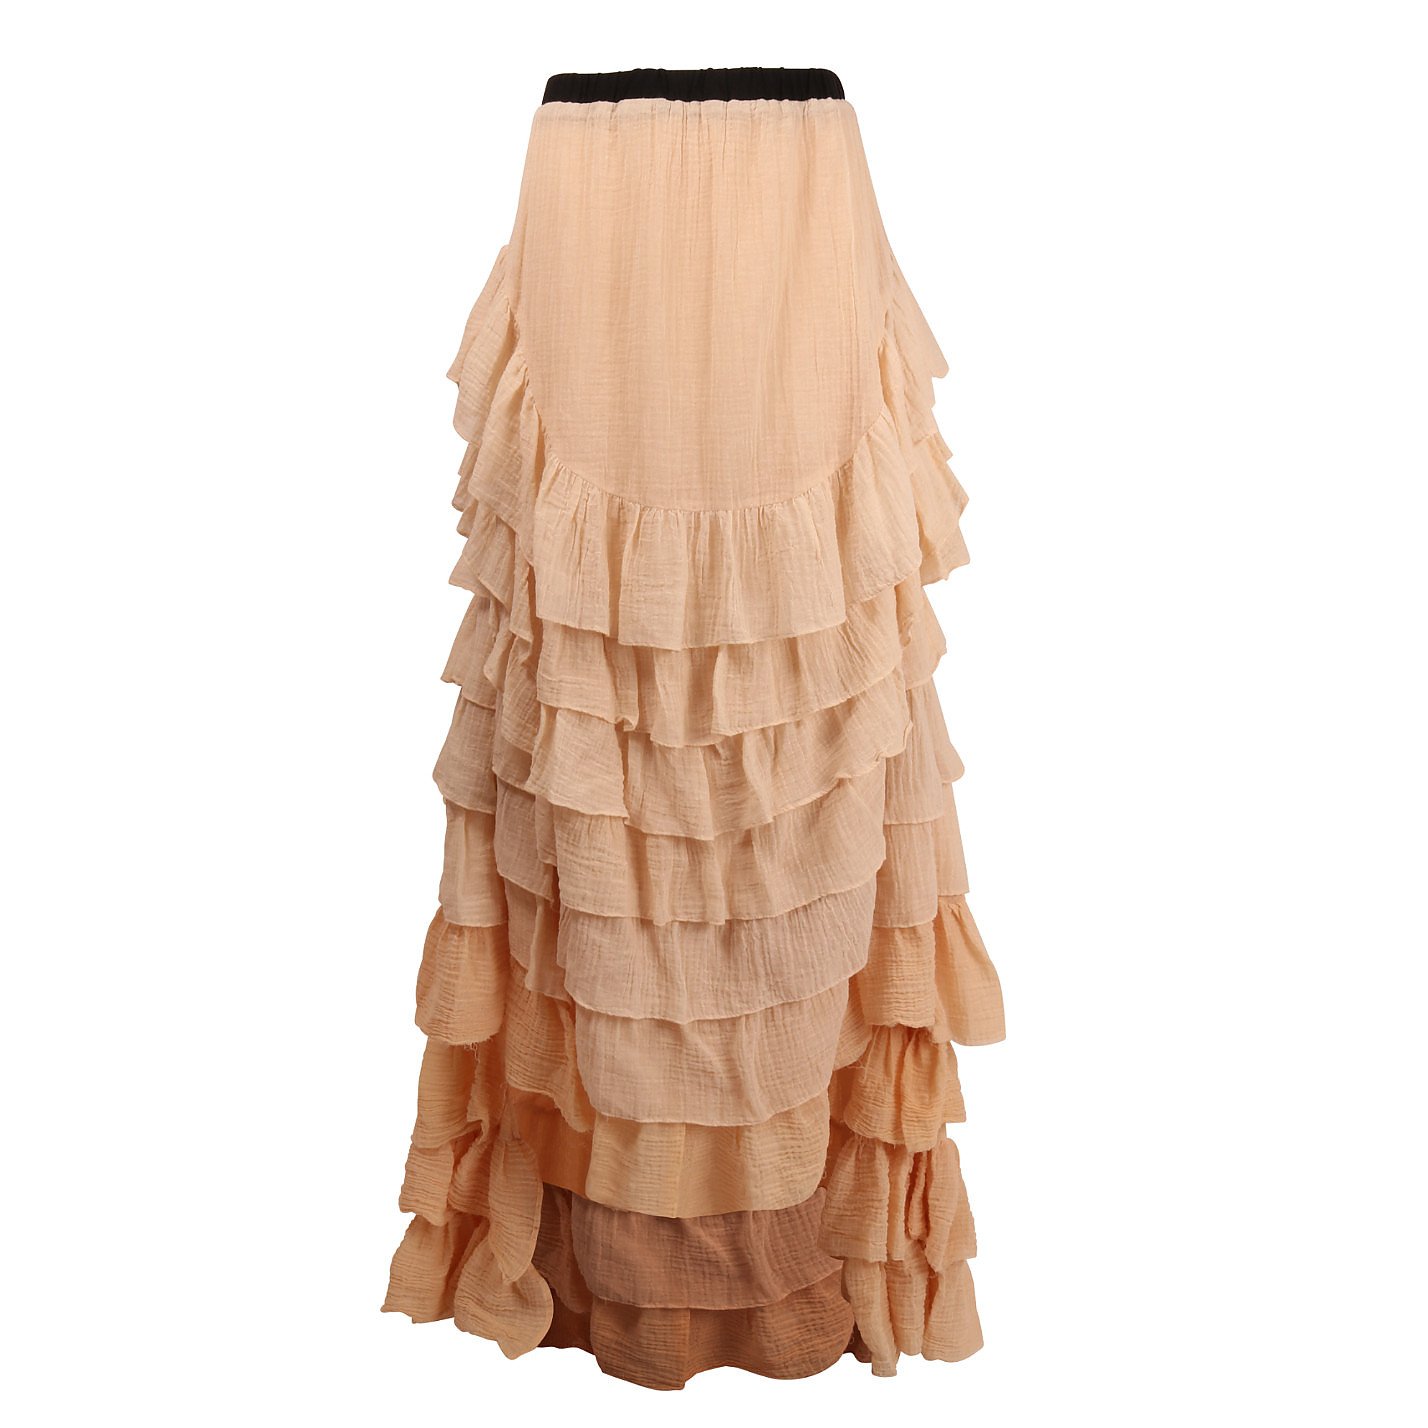 Heidi Merrick Fluir Cotton Gauze Skirt